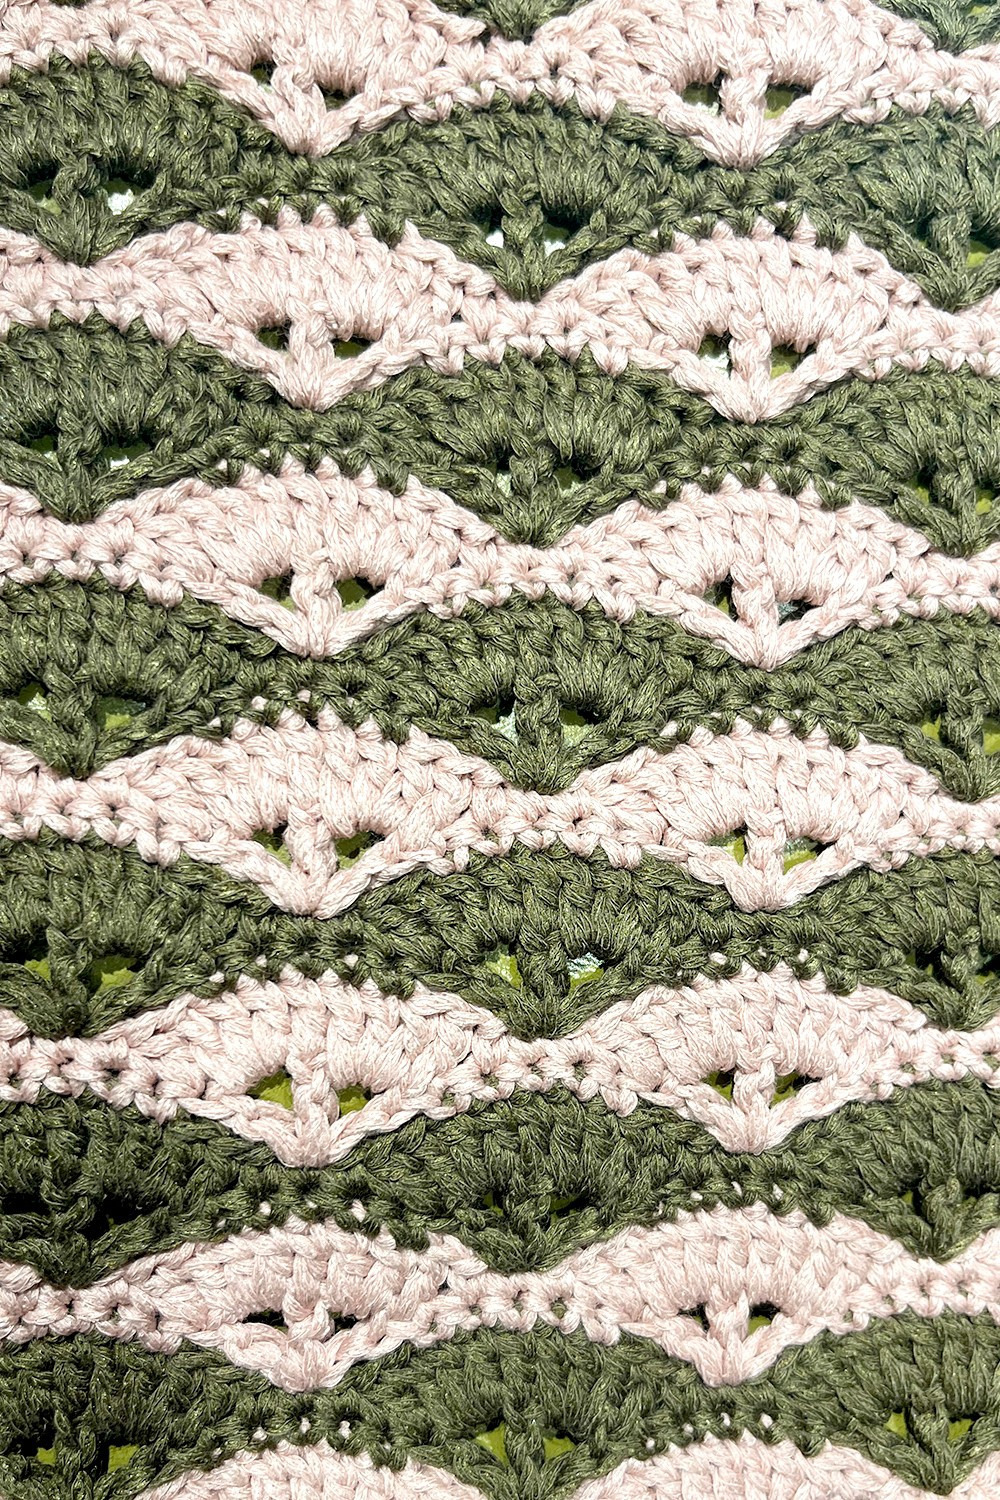 Eco Leather Crochet 2way バッグA 詳細画像 グリーン 9